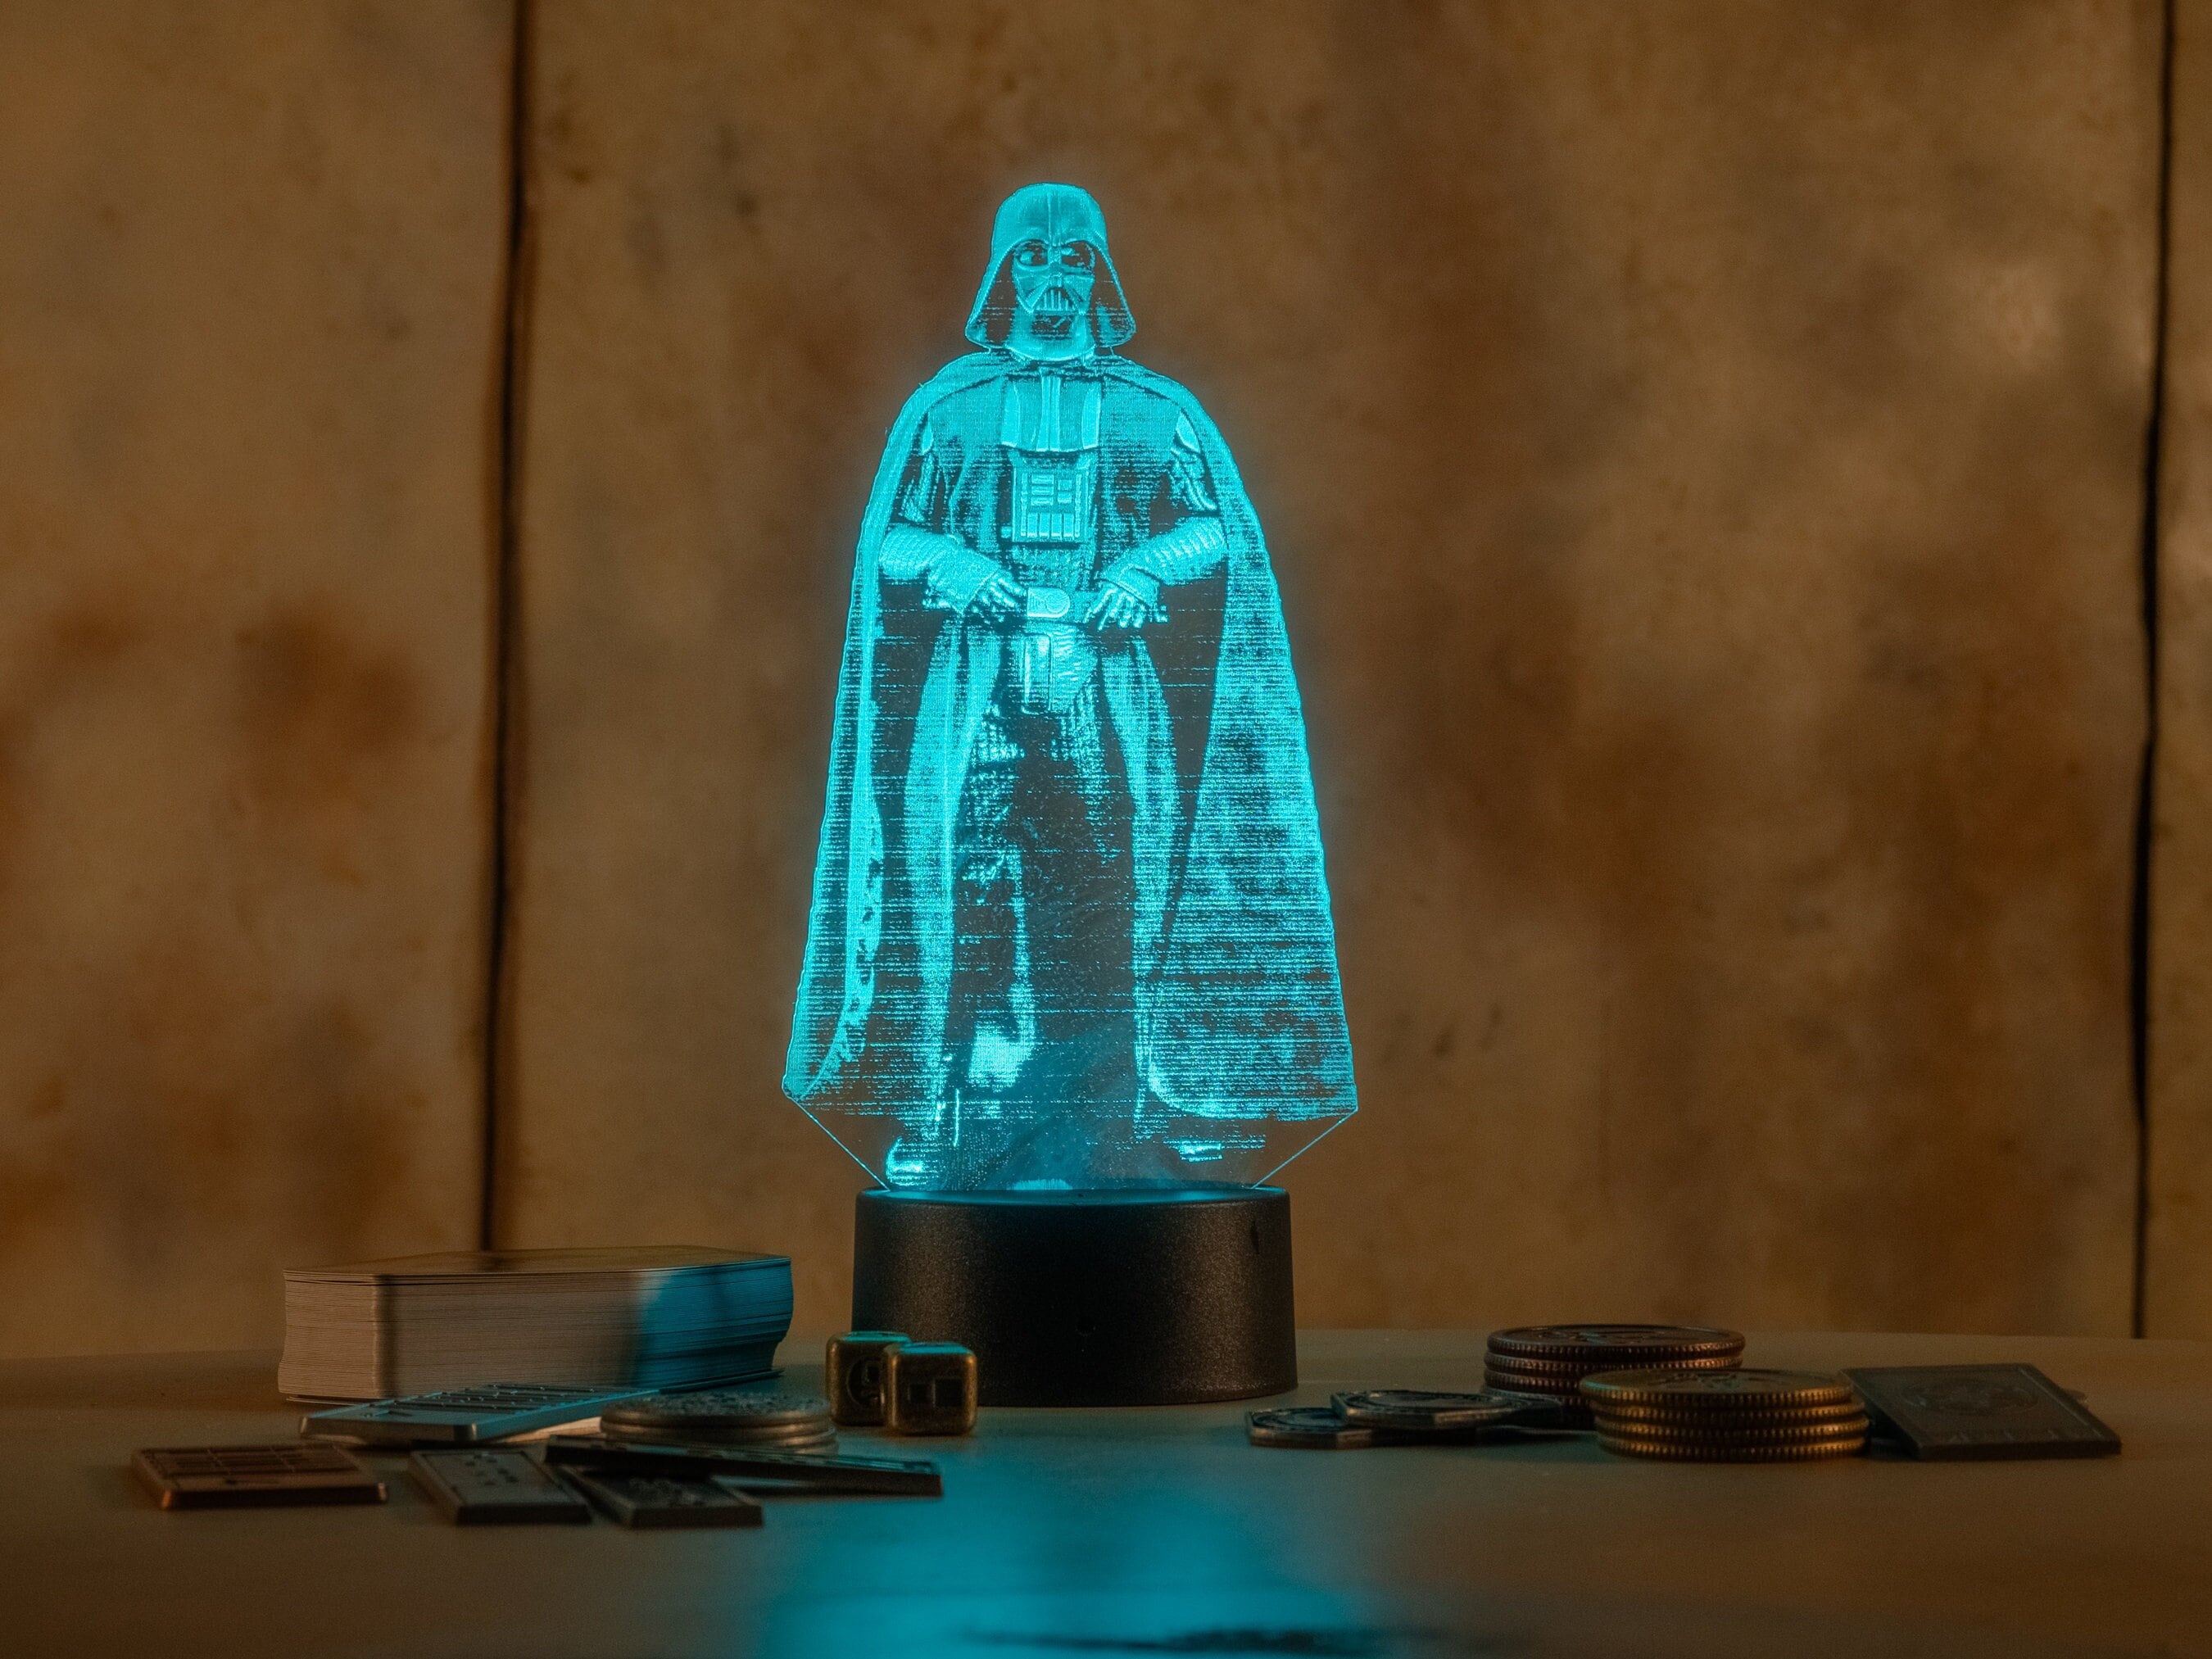 Disney Starwars Darth Vader Transparent Double Layer Glass Men